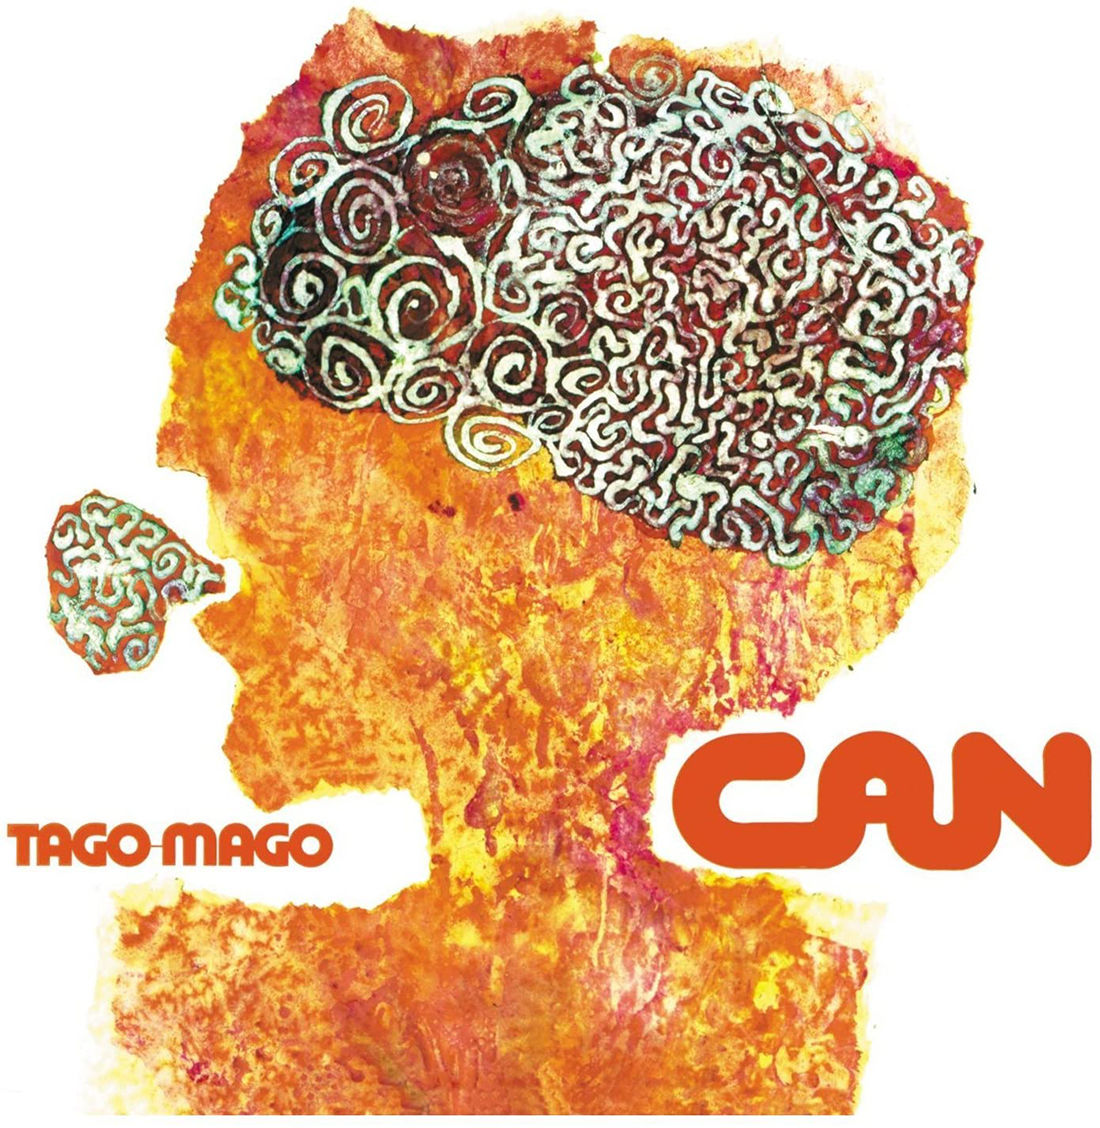 Tago Mago: Vinyl LP